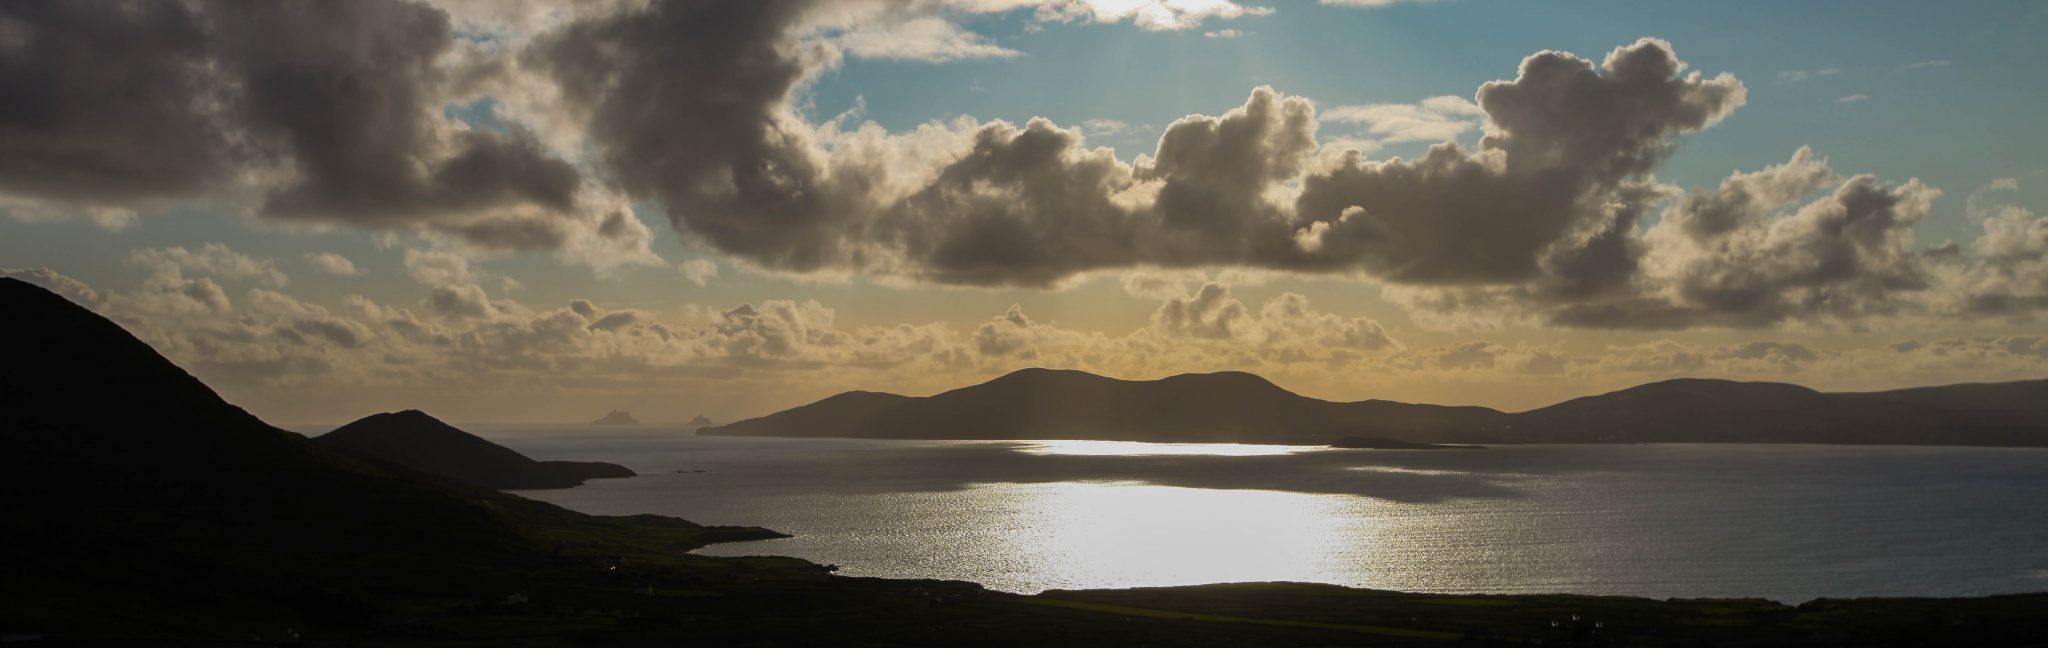 The spectacular landscape of the Dingle Peninsula, South West Ireland.